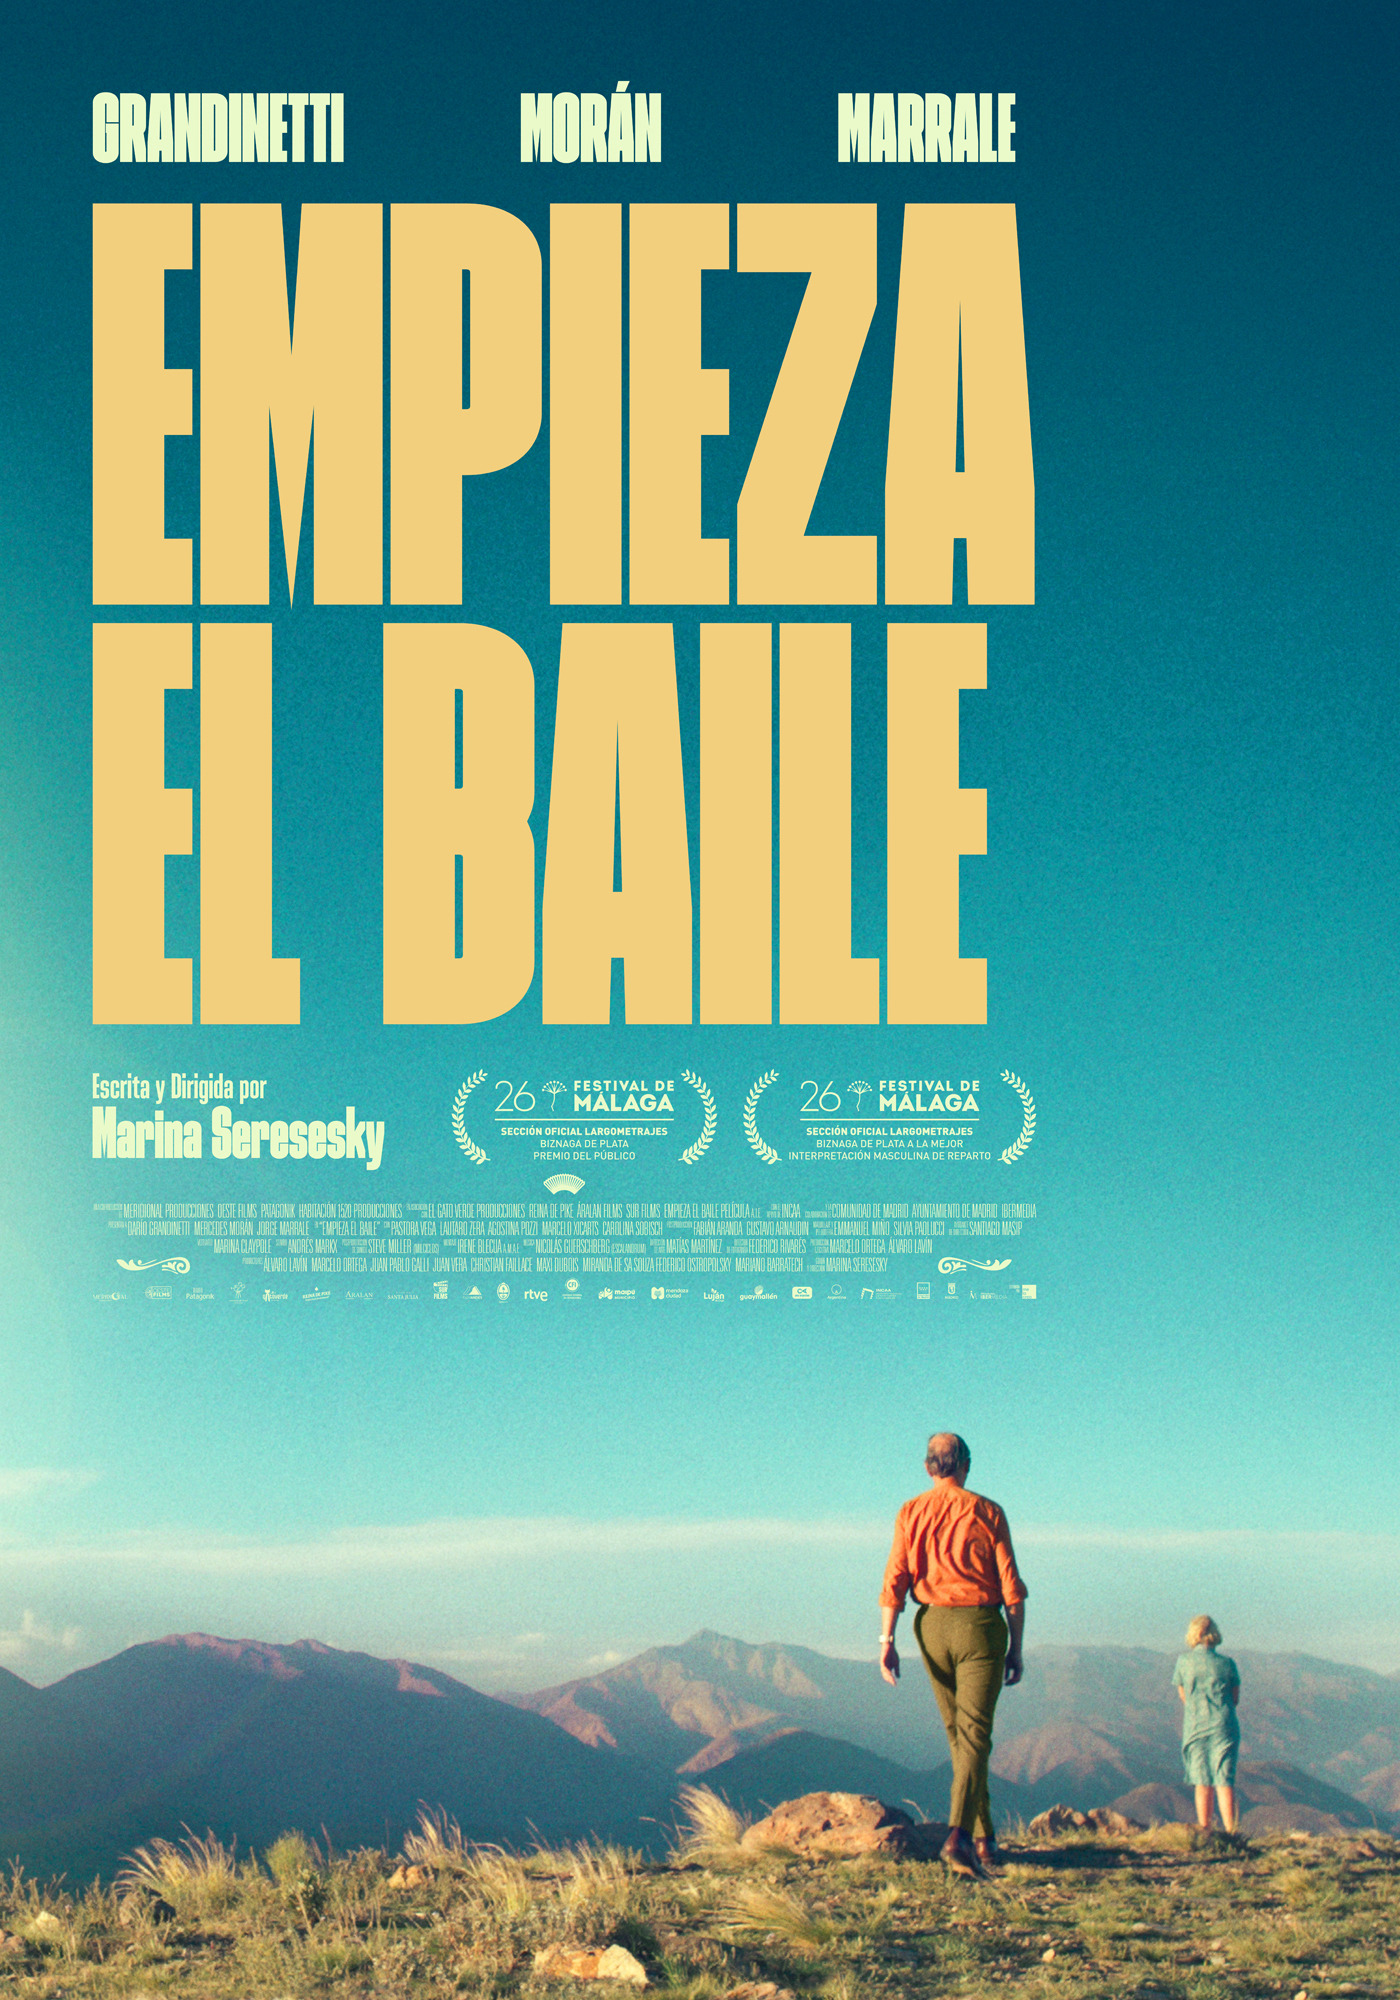 Mega Sized Movie Poster Image for Empieza el baile (#3 of 3)